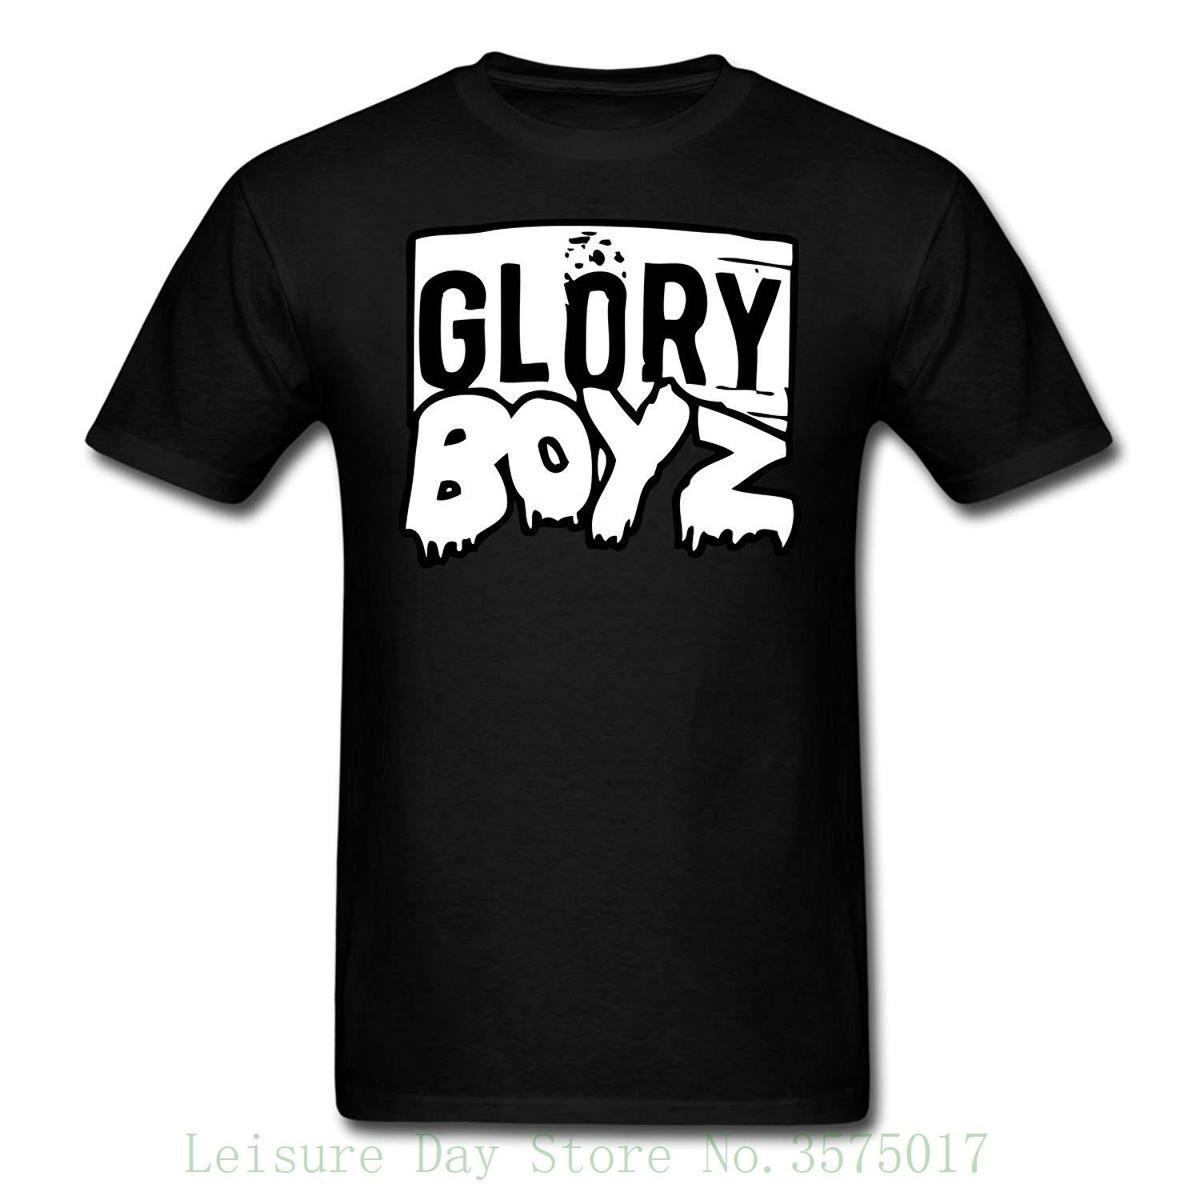 Cool MP Logo - Glory Boyz Gbe Logo Mp Men'S T Shirt Good Quality Brand Cotton Shirt ...